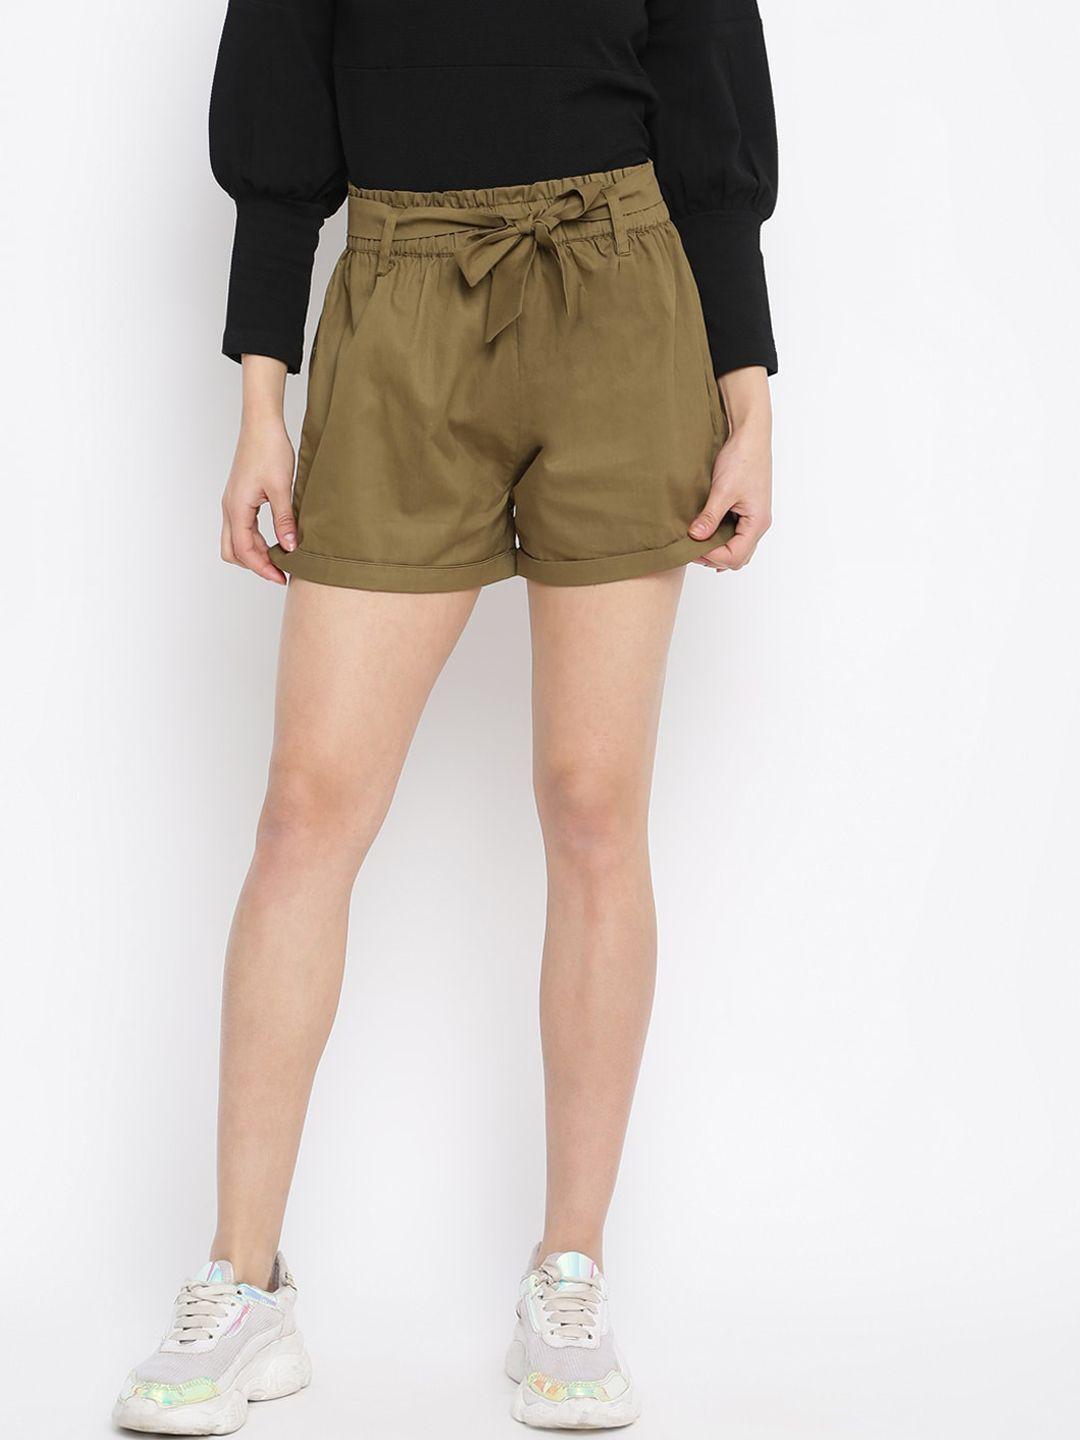 mayra women khaki shorts